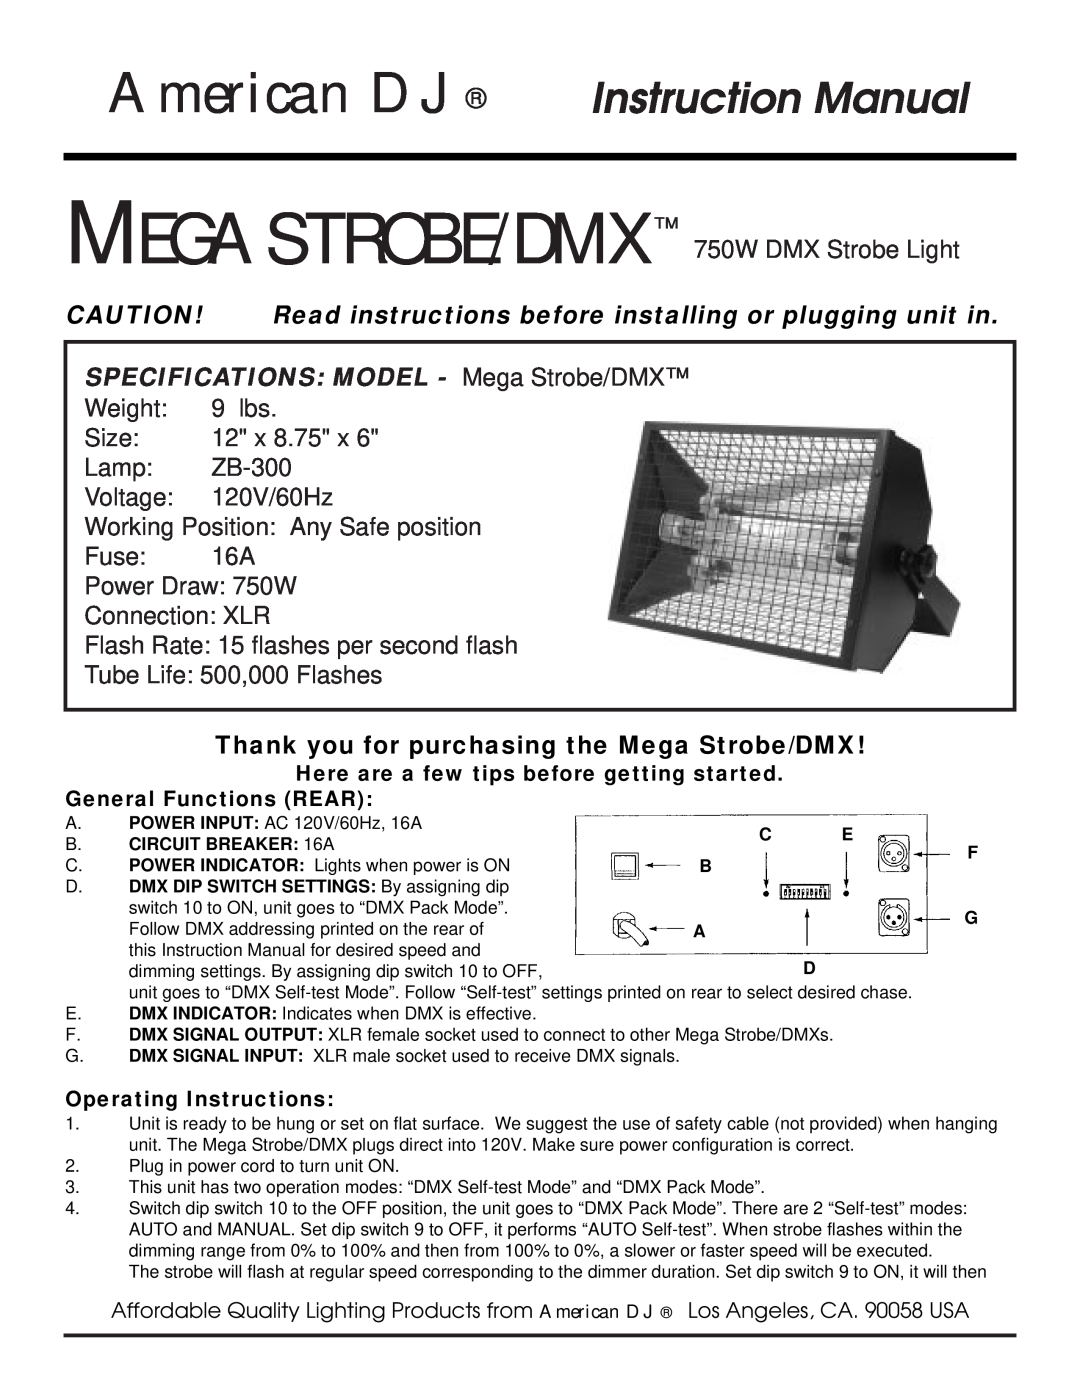 American DJ 750W specifications American DJ, SPECIFICATIONS MODEL - Mega Strobe/DMX 